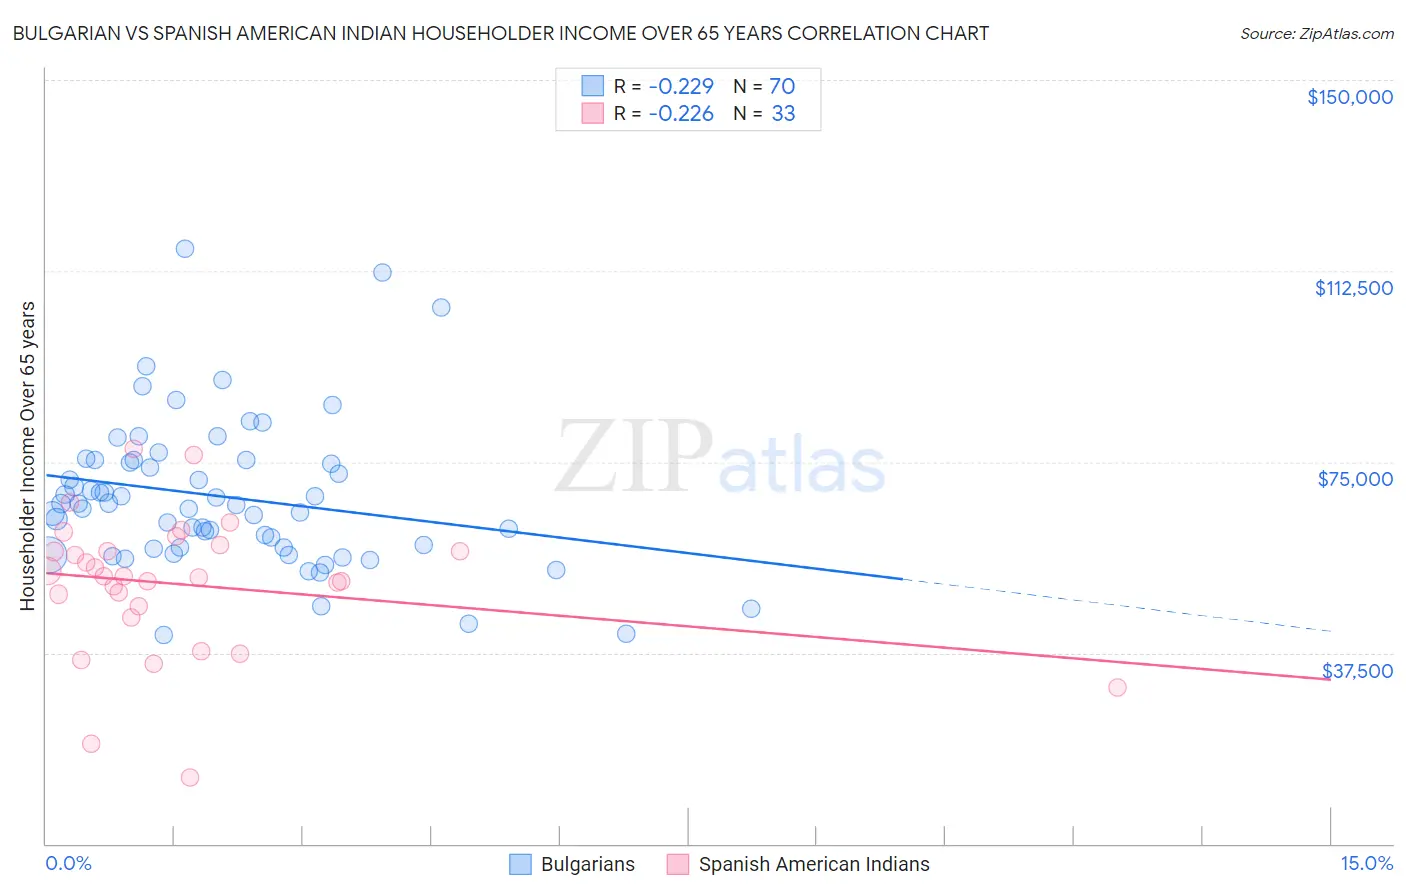 Bulgarian vs Spanish American Indian Householder Income Over 65 years